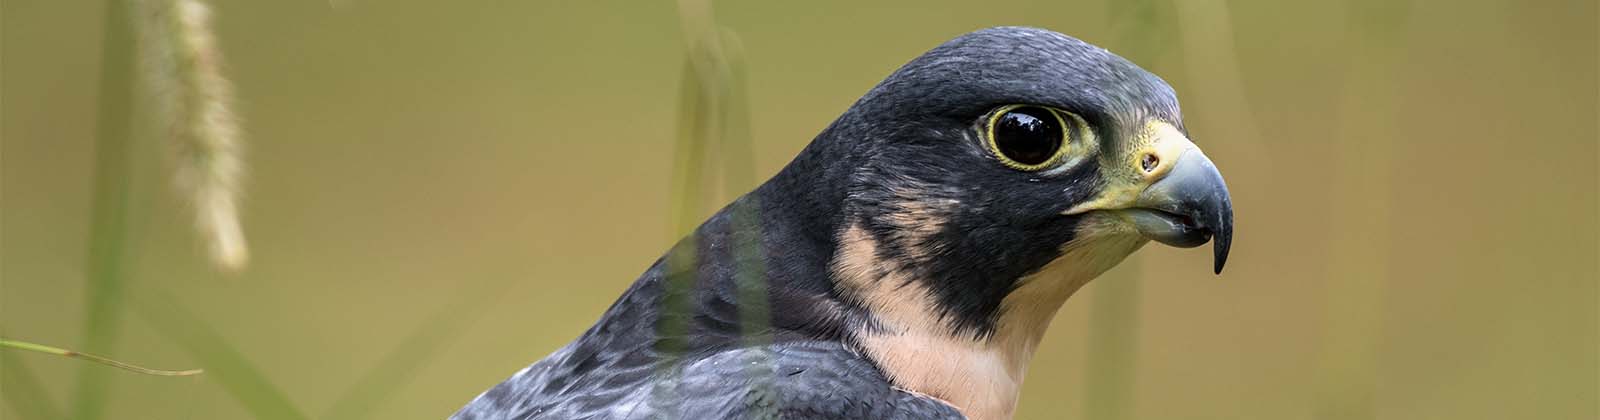 Peregrine Falcon - Los Angeles Zoo and Botanical Gardens (LA Zoo)